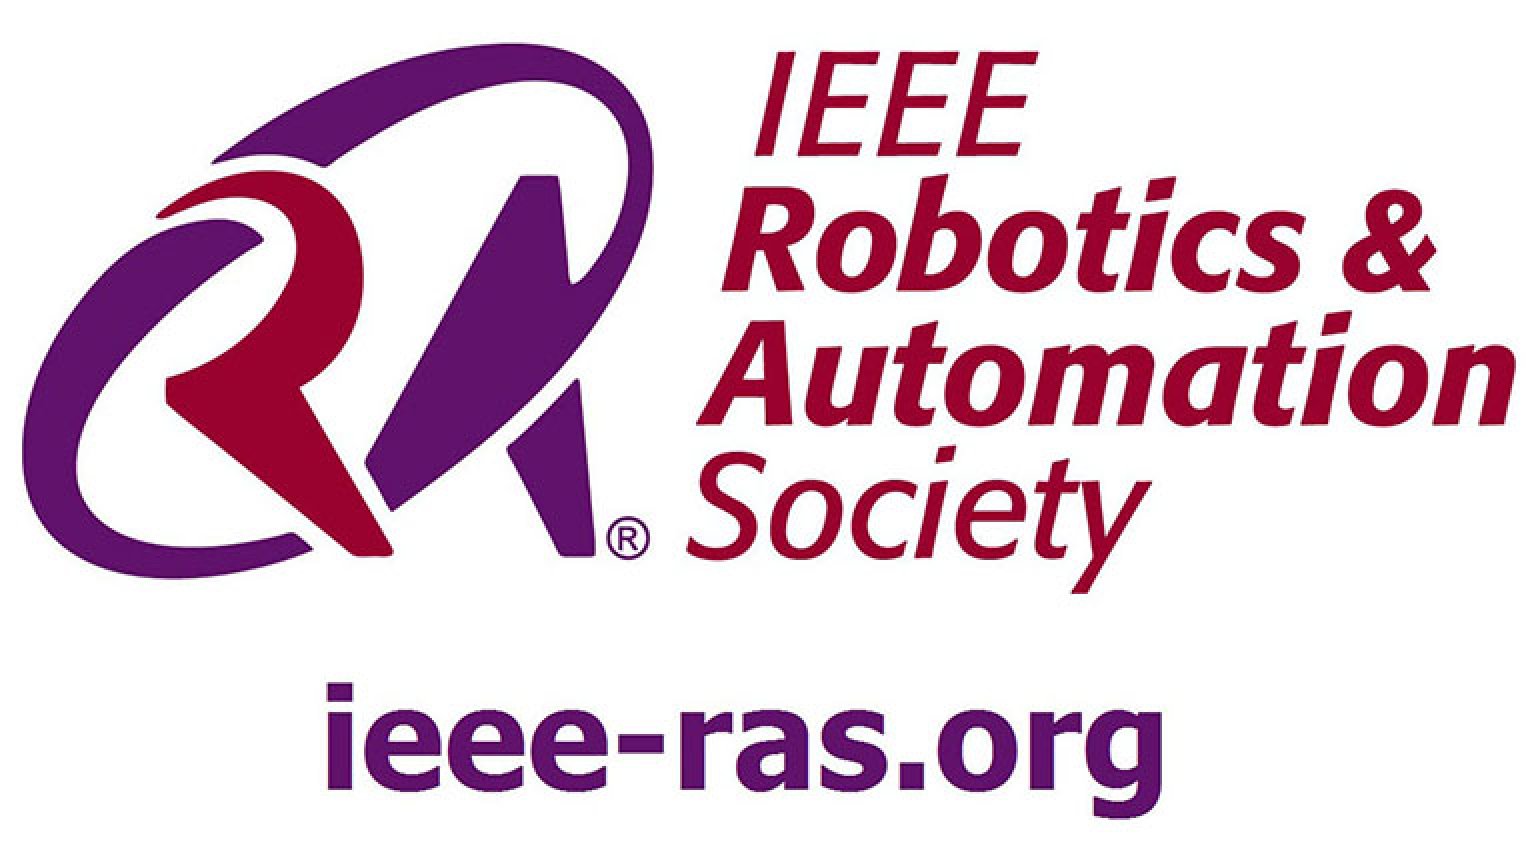 IEEE Robotics and Automation Society